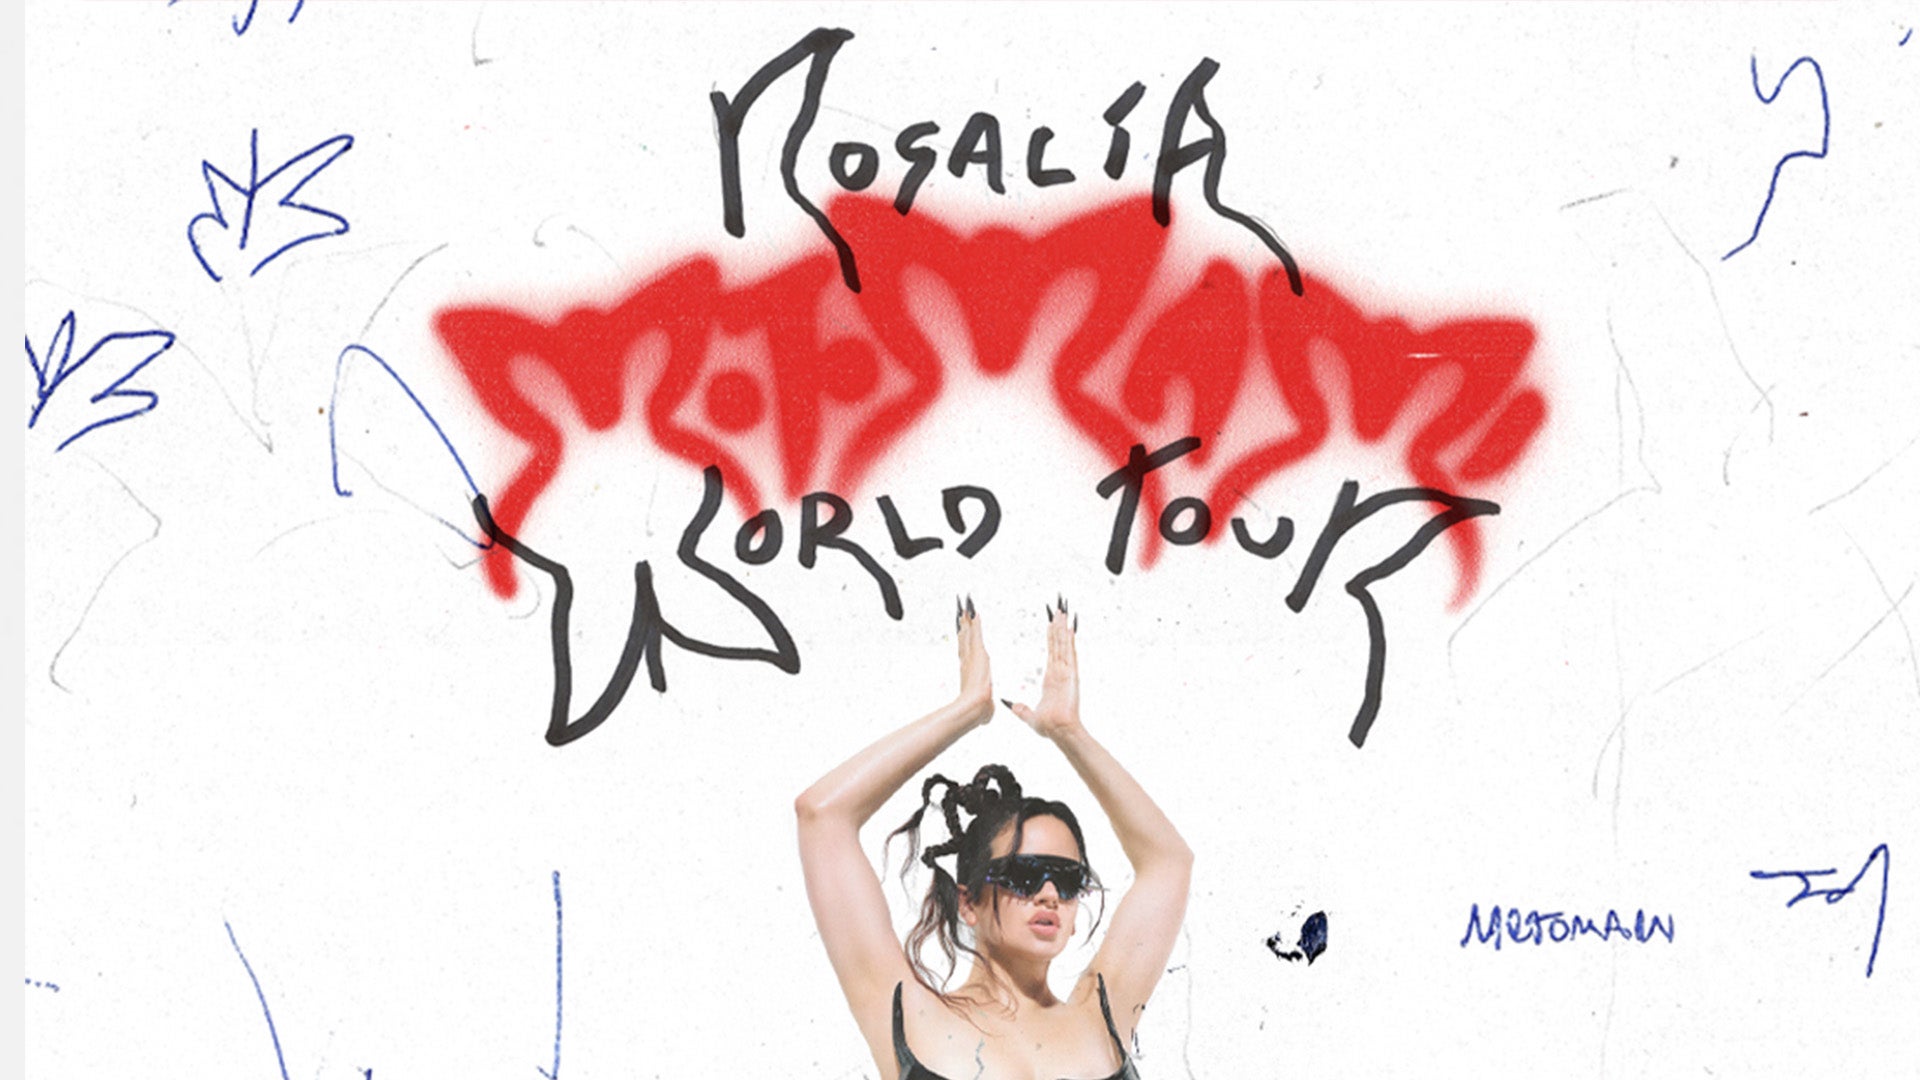 CANADA on Twitter Stills from TIKTOKuss LIVE PERFORMANCE presenting  ROSALIAs third studio album Motomami Directed by Stillz Rosalía  Vila and Ferran Echegaray httpstcoeSmswrJdG8  Twitter